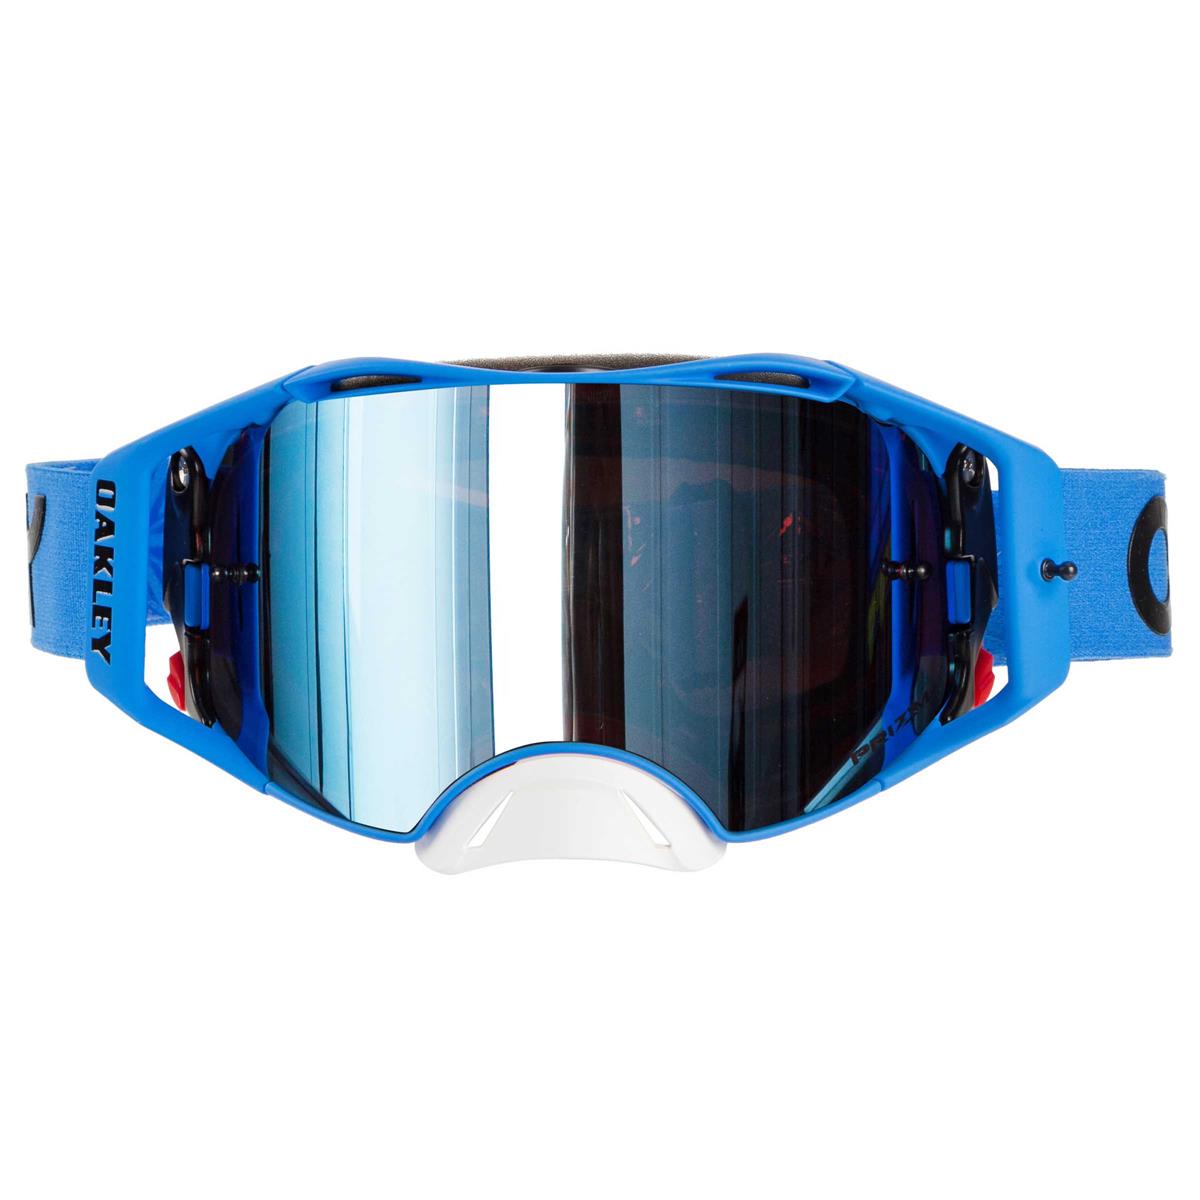 oakley blue goggles